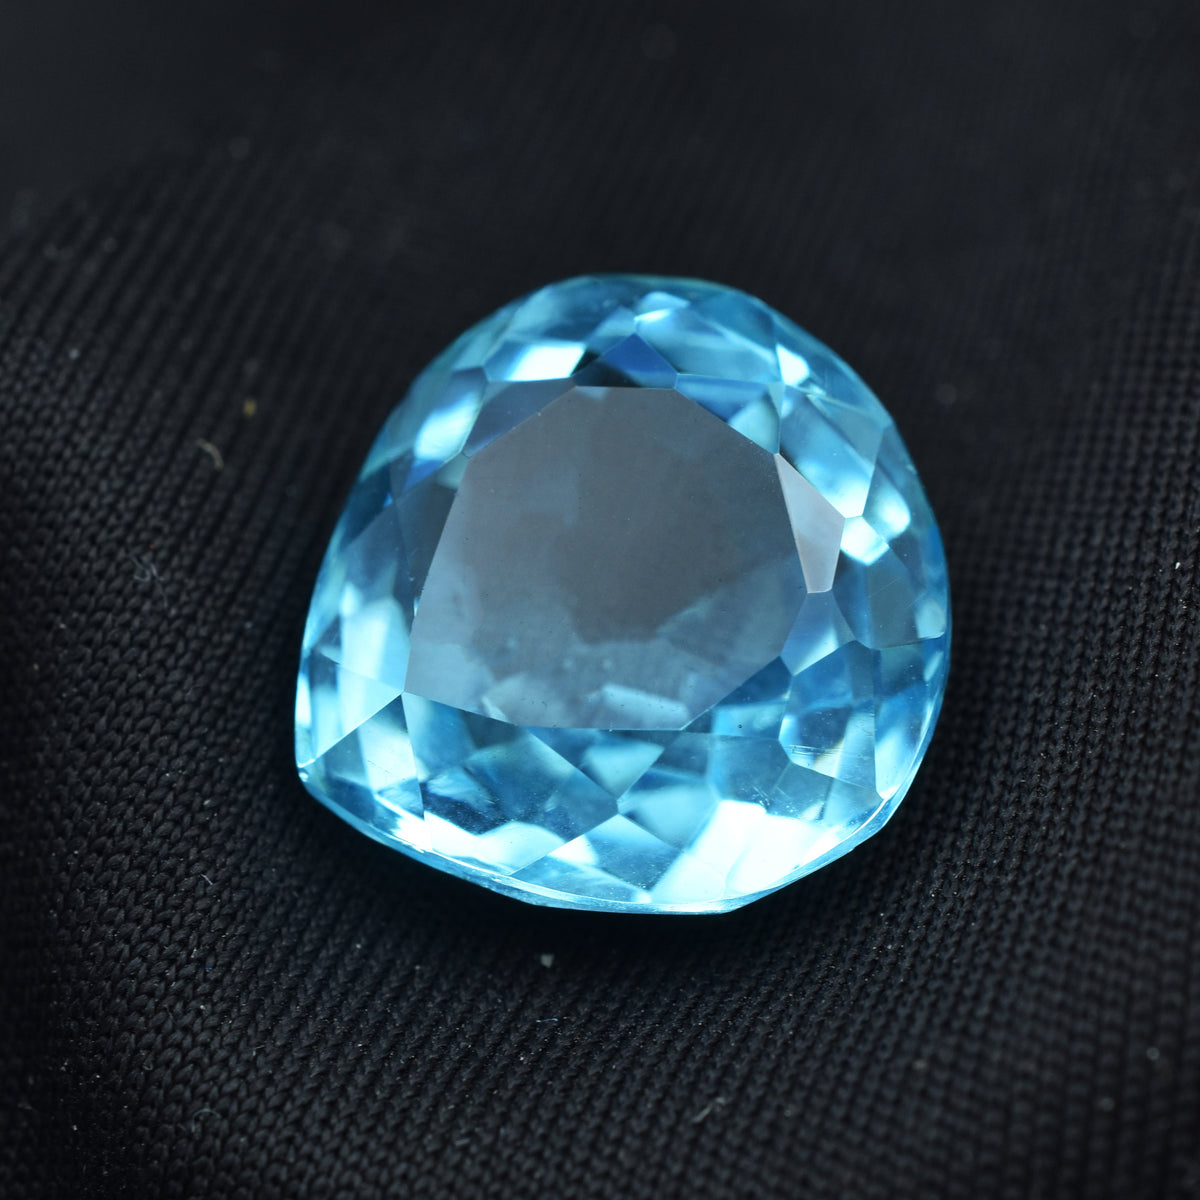 Natural Blue Aquamarine Gem 14.35 Ct Pear Cut Natural Certified Loose Gemstone | Jewelry Making Gem | Gift For Her/ Him | Best Price